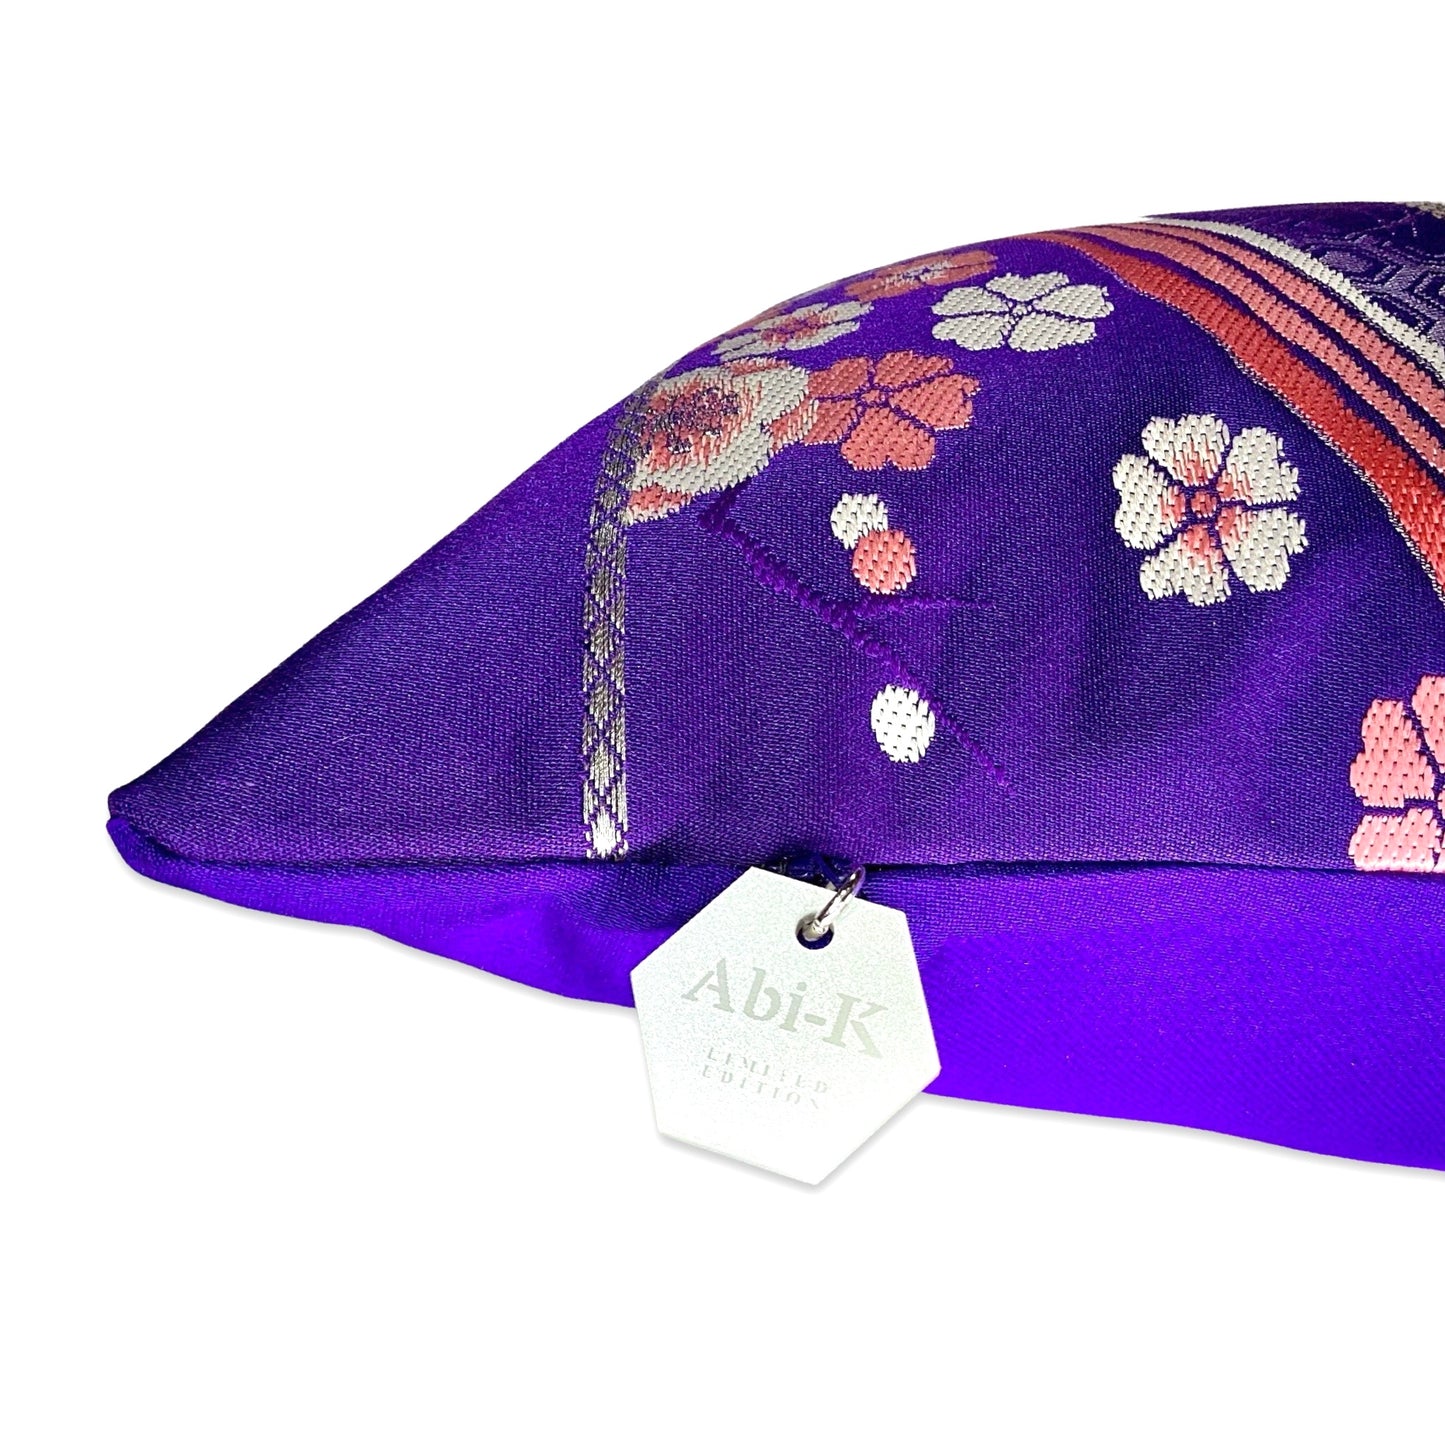 Abi-K Cushion ‘Pretty Purple’